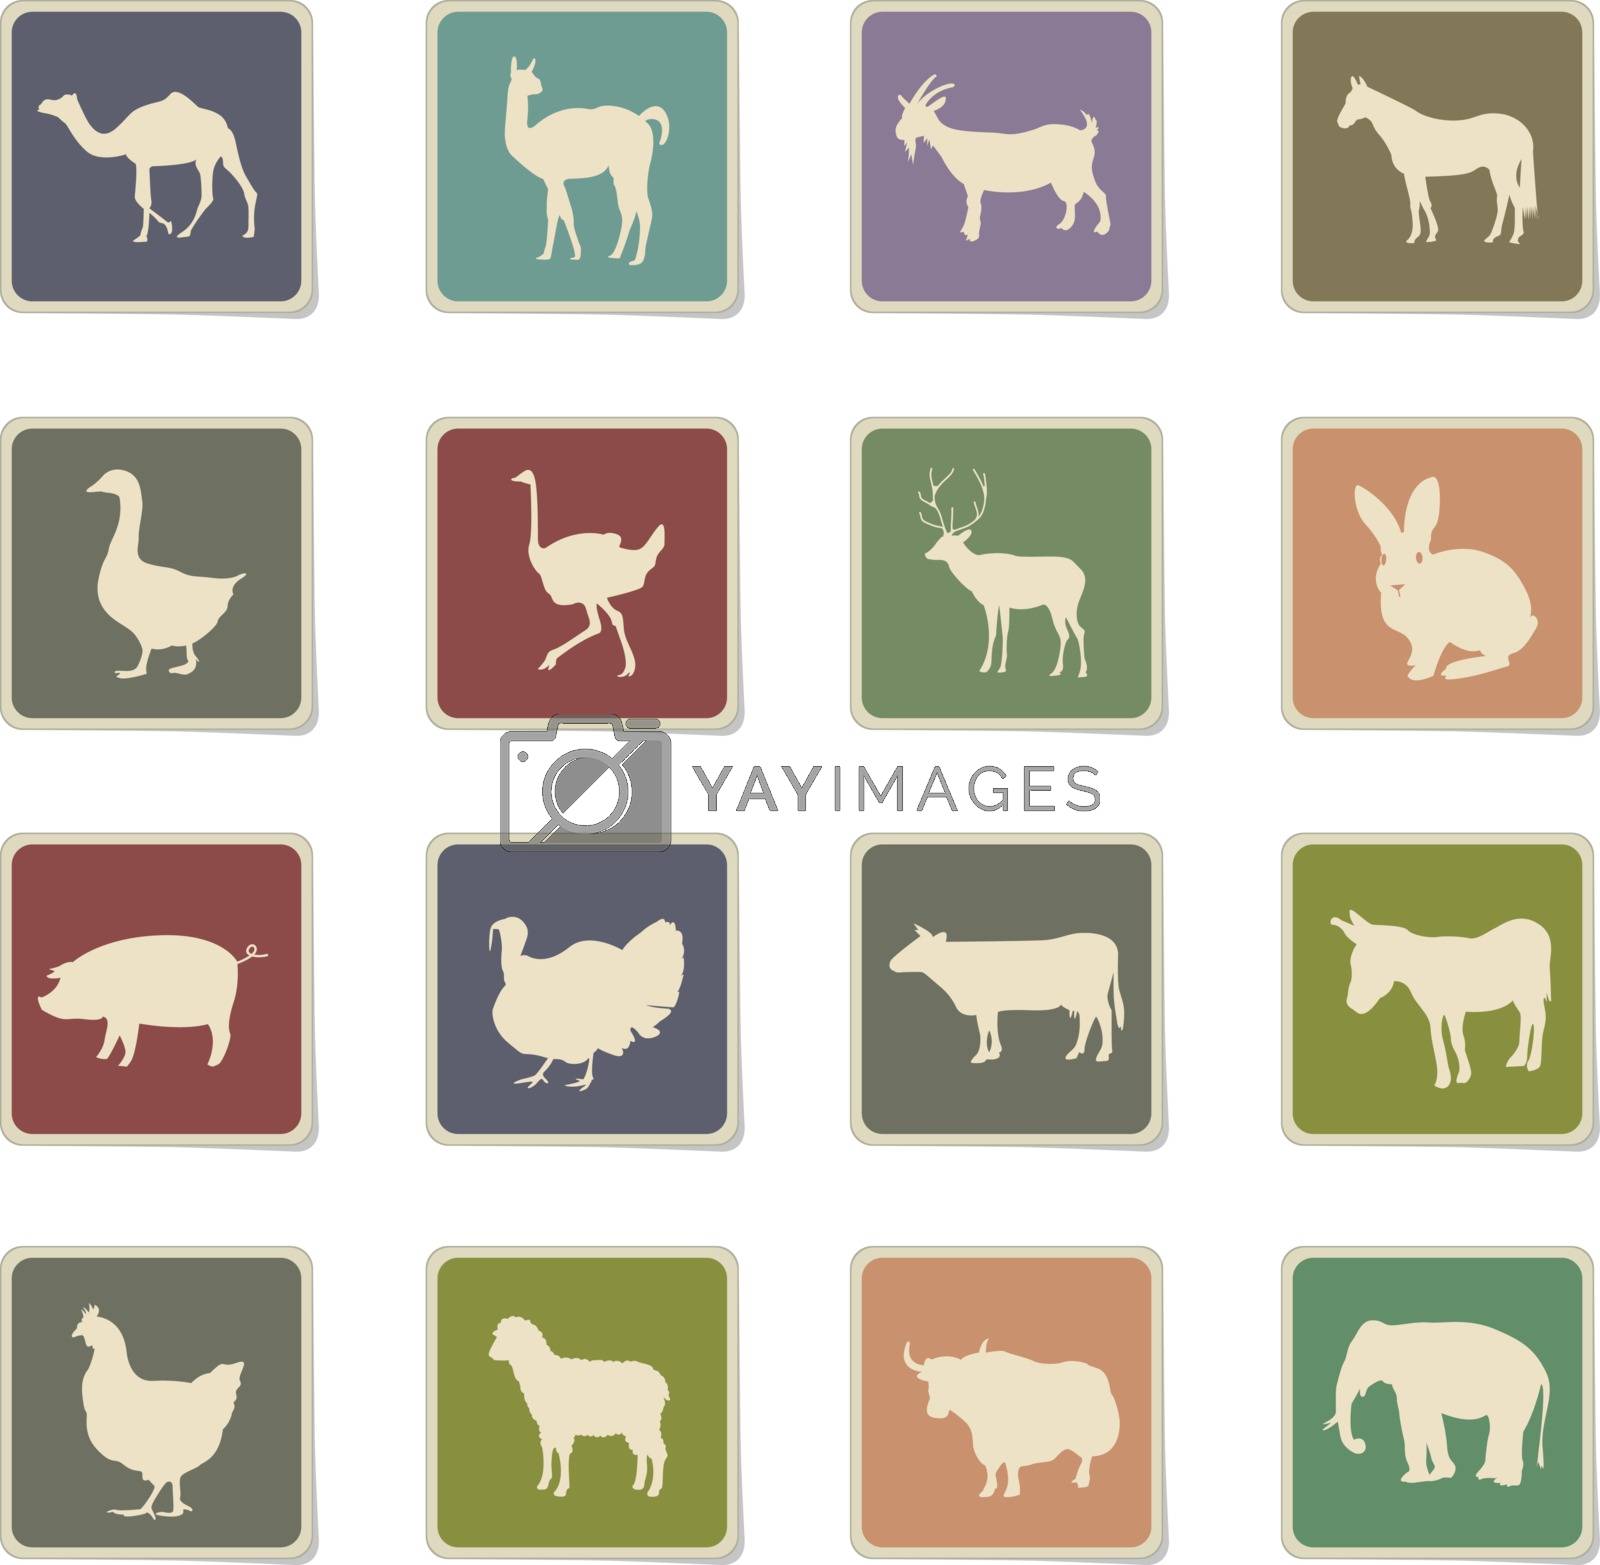 Royalty Free Vector | farm animals icon set by ayax